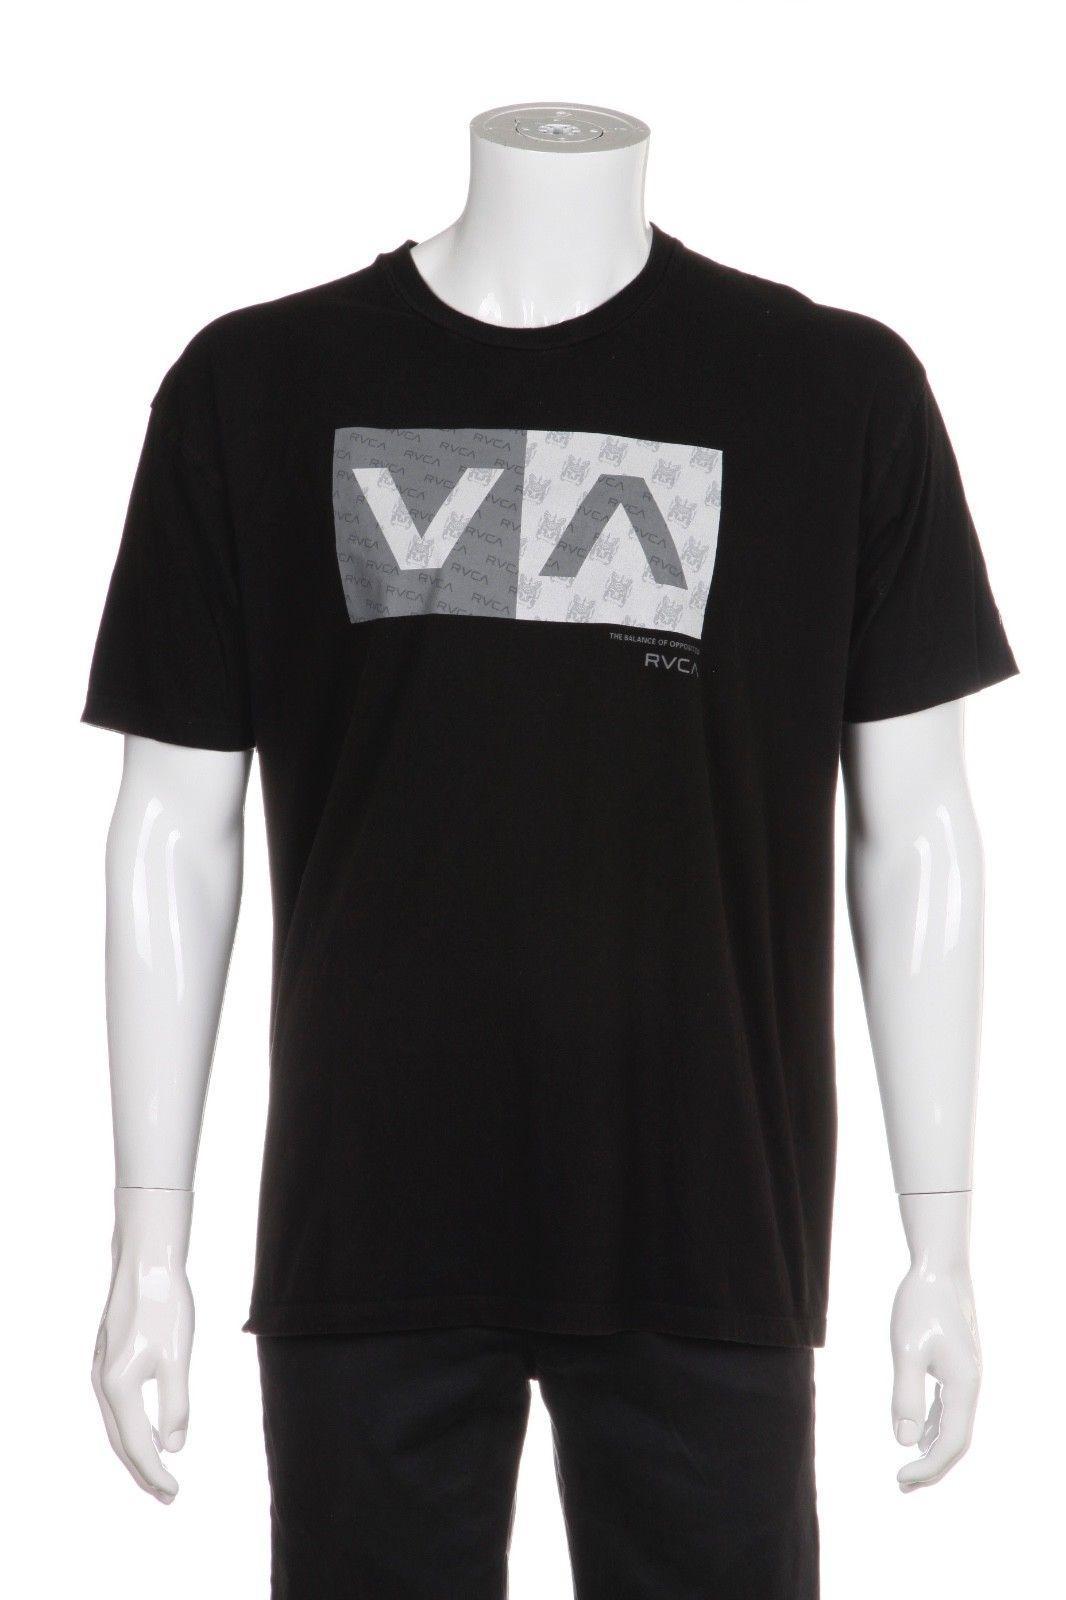 RVCA VA Logo - RVCA T Shirt Men'S XL Black VA Logo Graphic Short Sleeve Shirt Tee